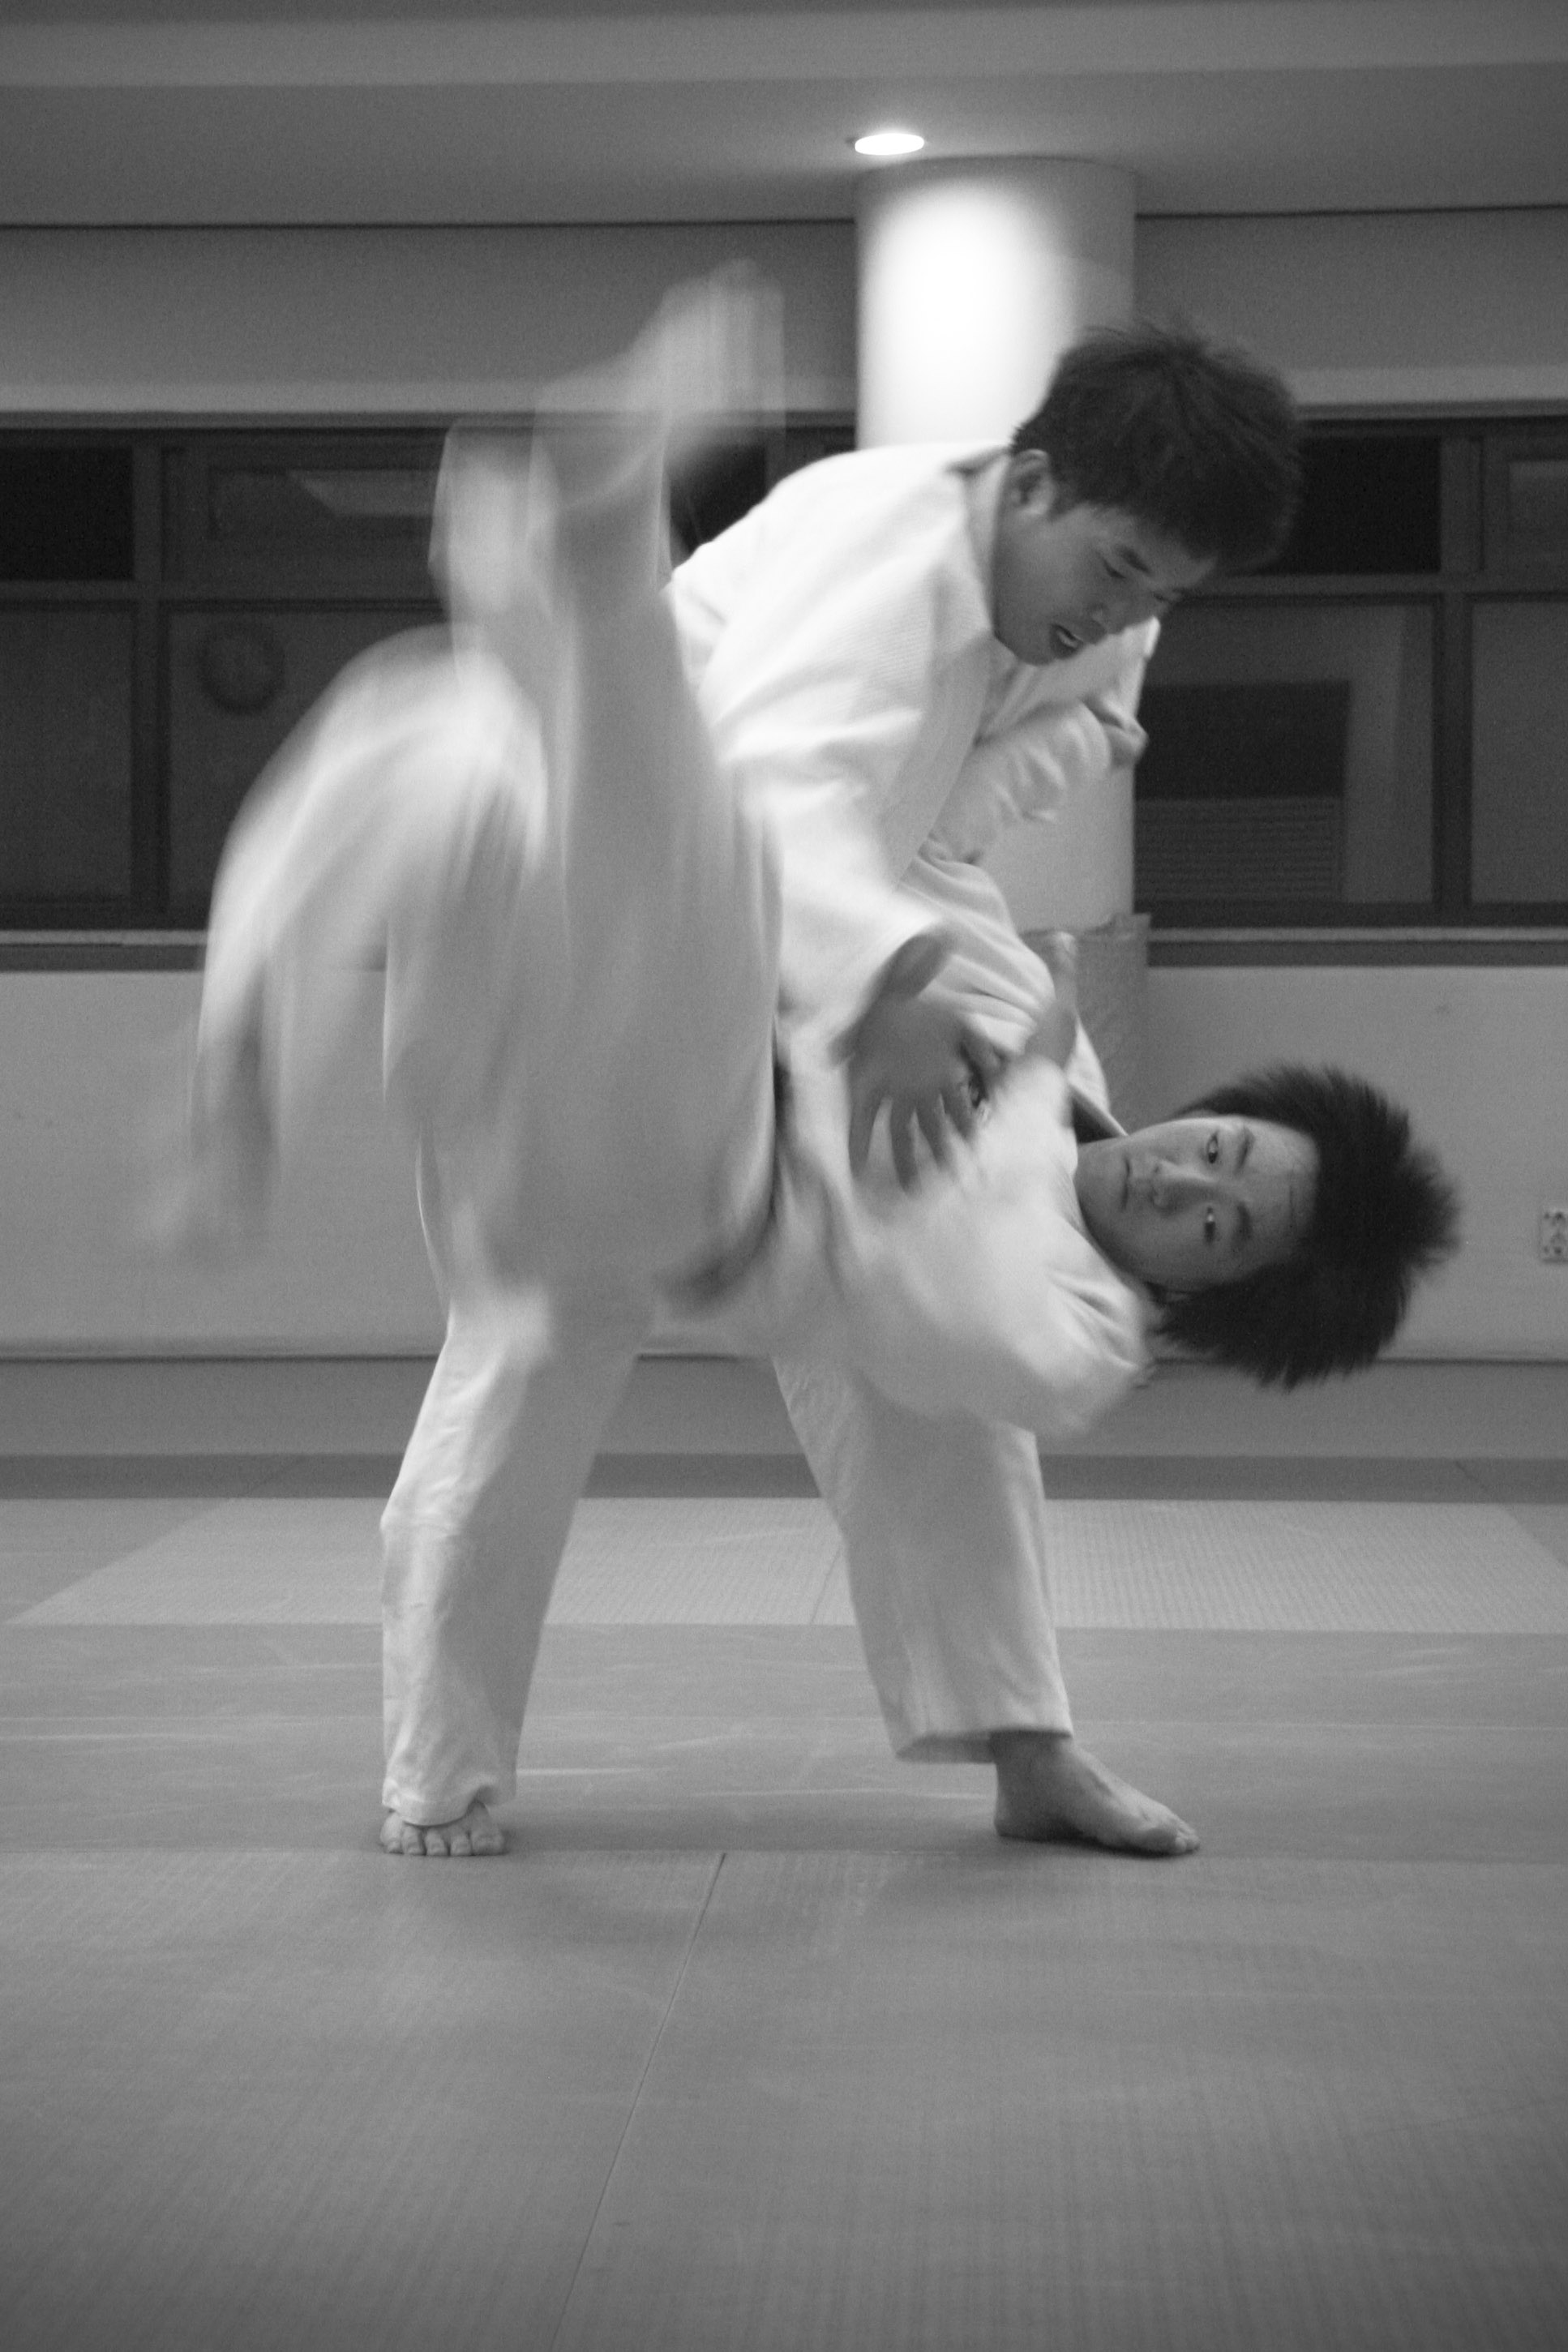 Download File:Judo throw 01.jpg - Wikimedia Commons